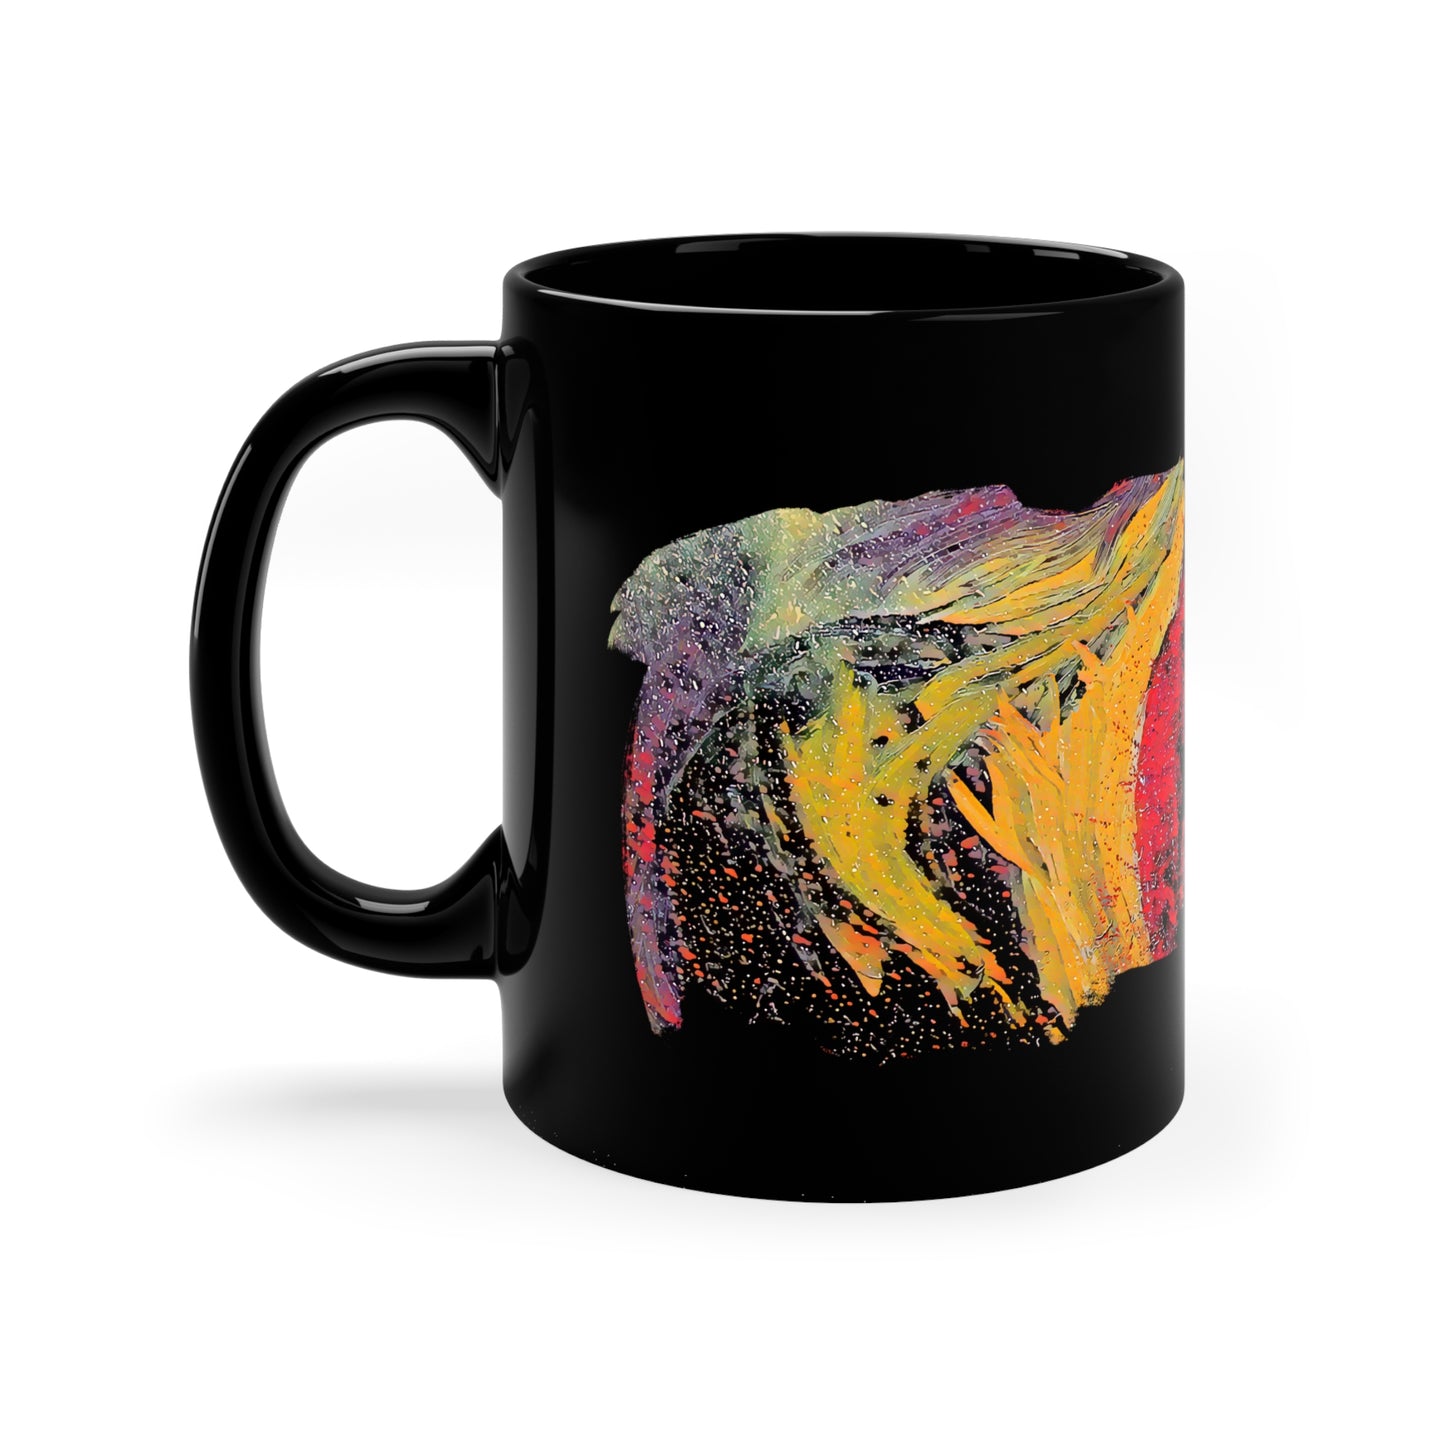 An Ocean of Color 11oz Black Mug